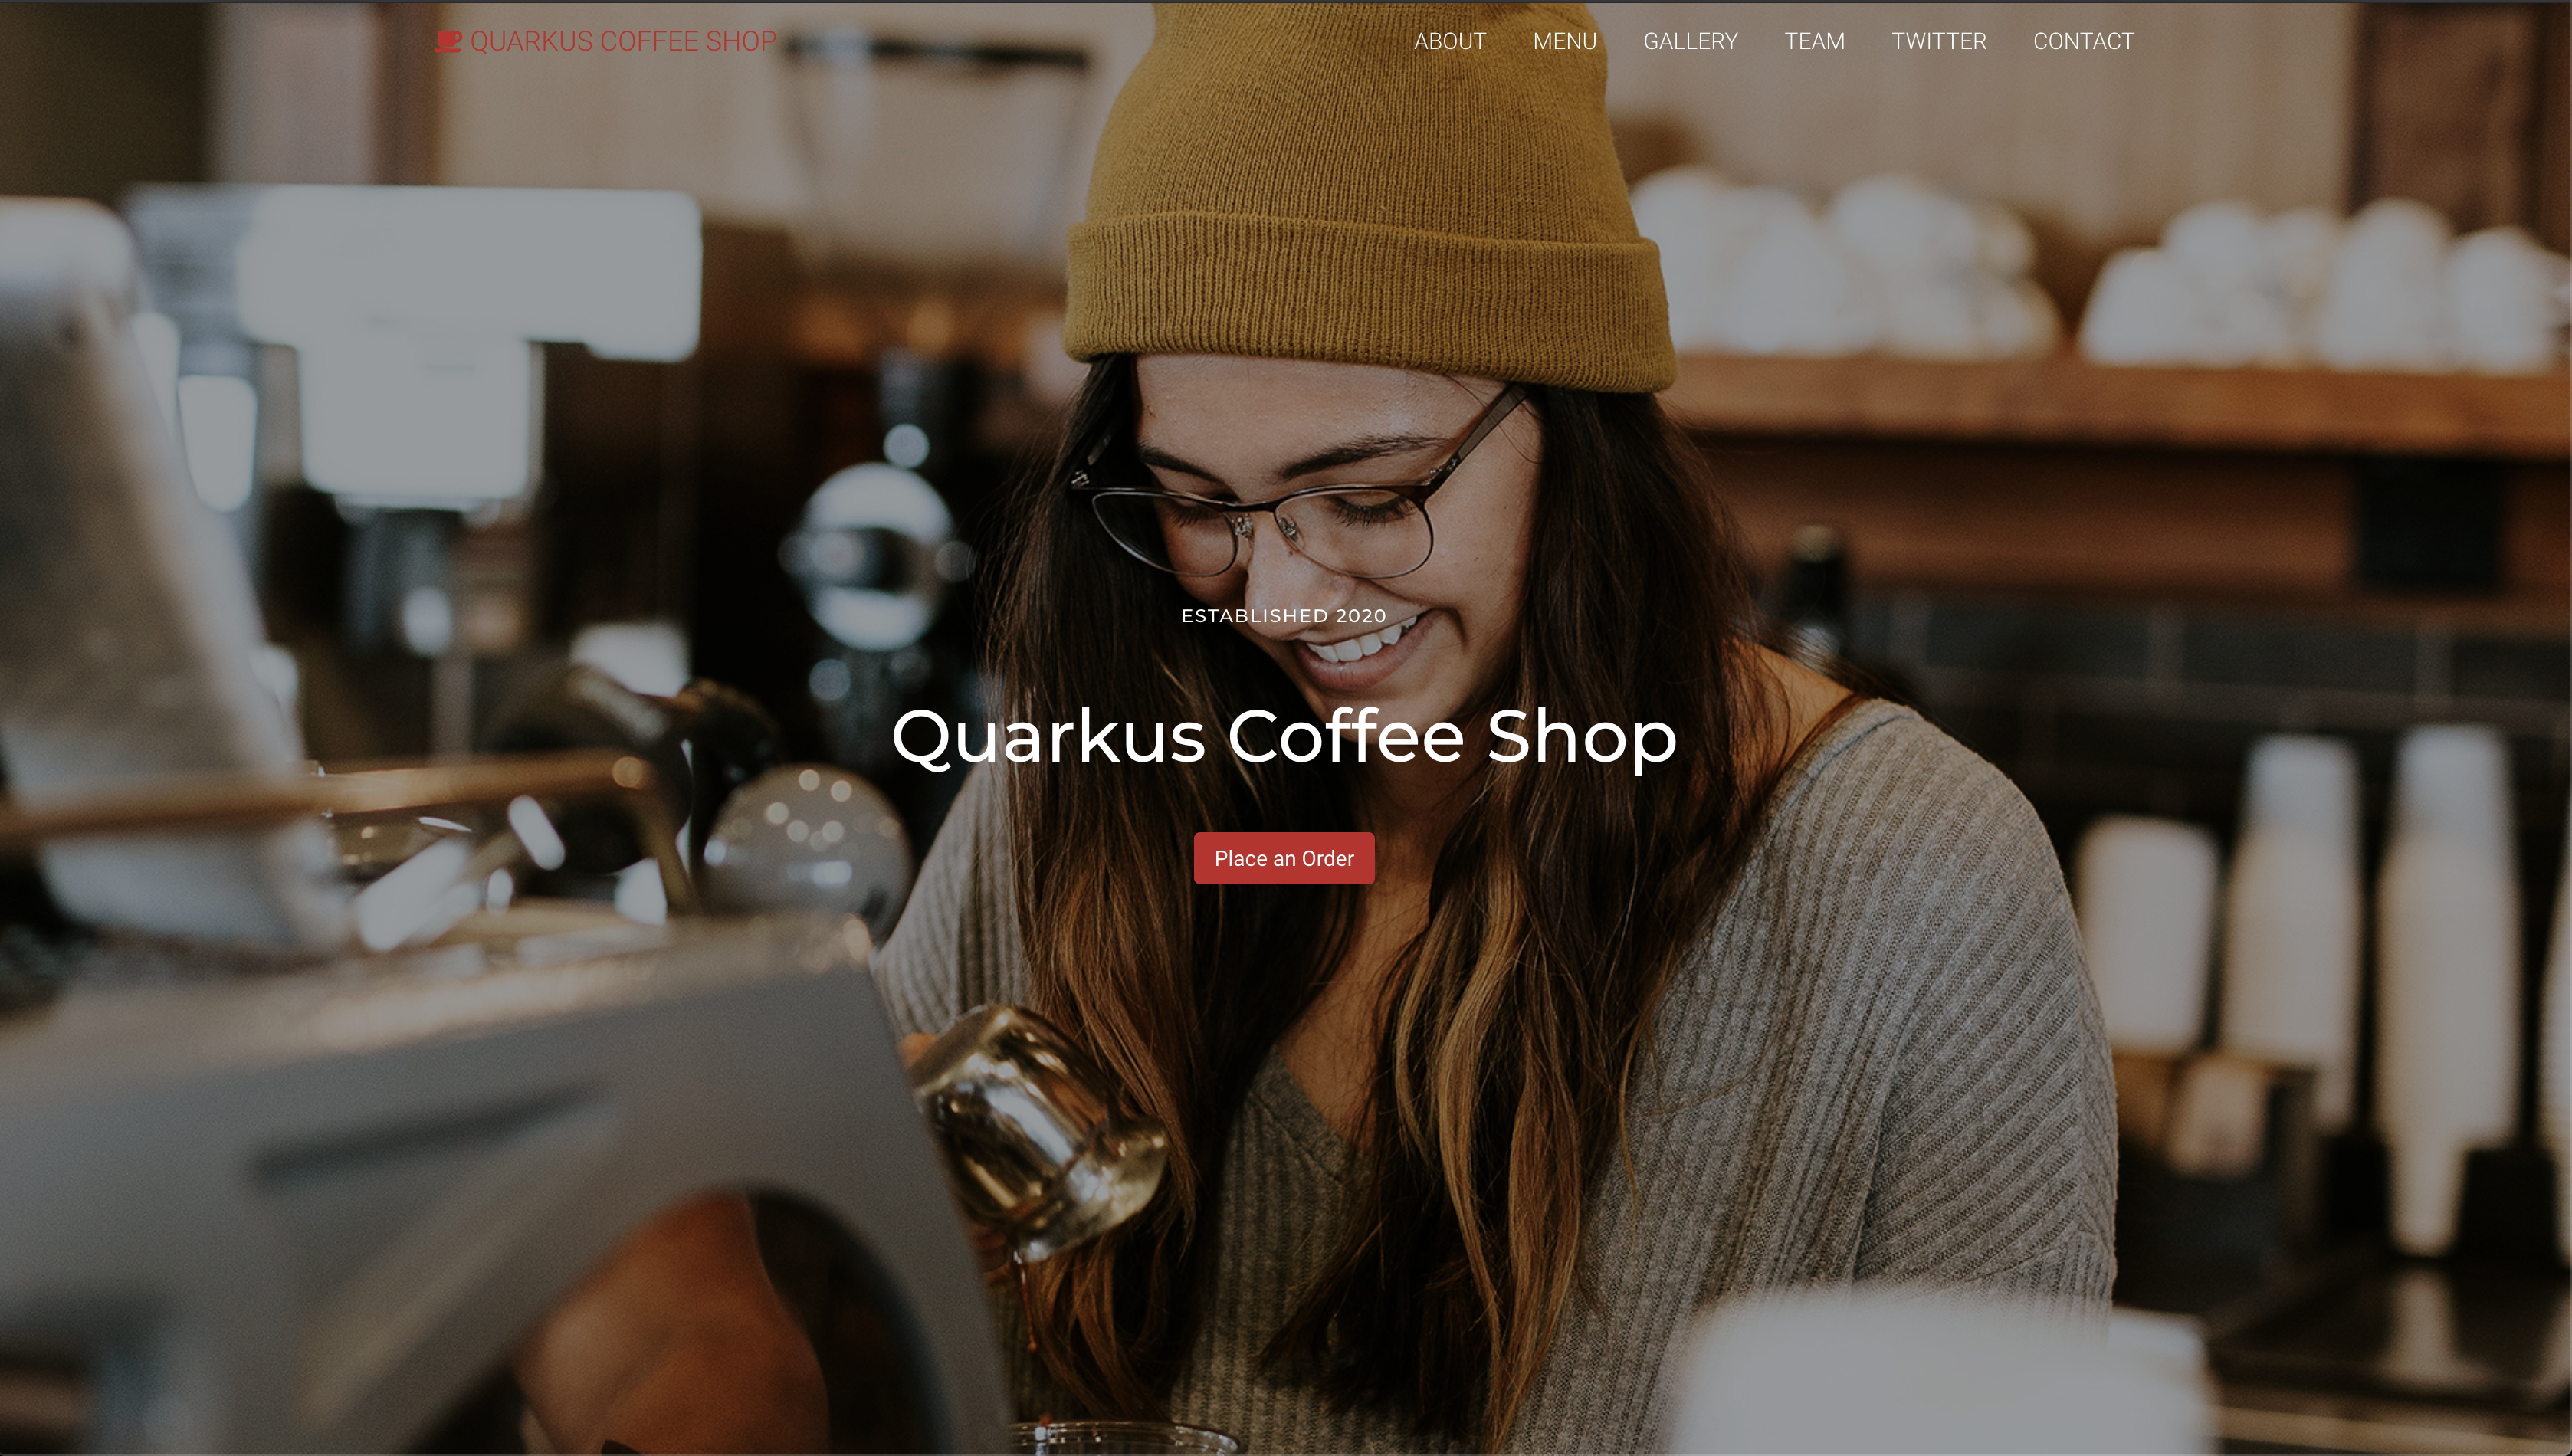 quarkus cafe application landing page